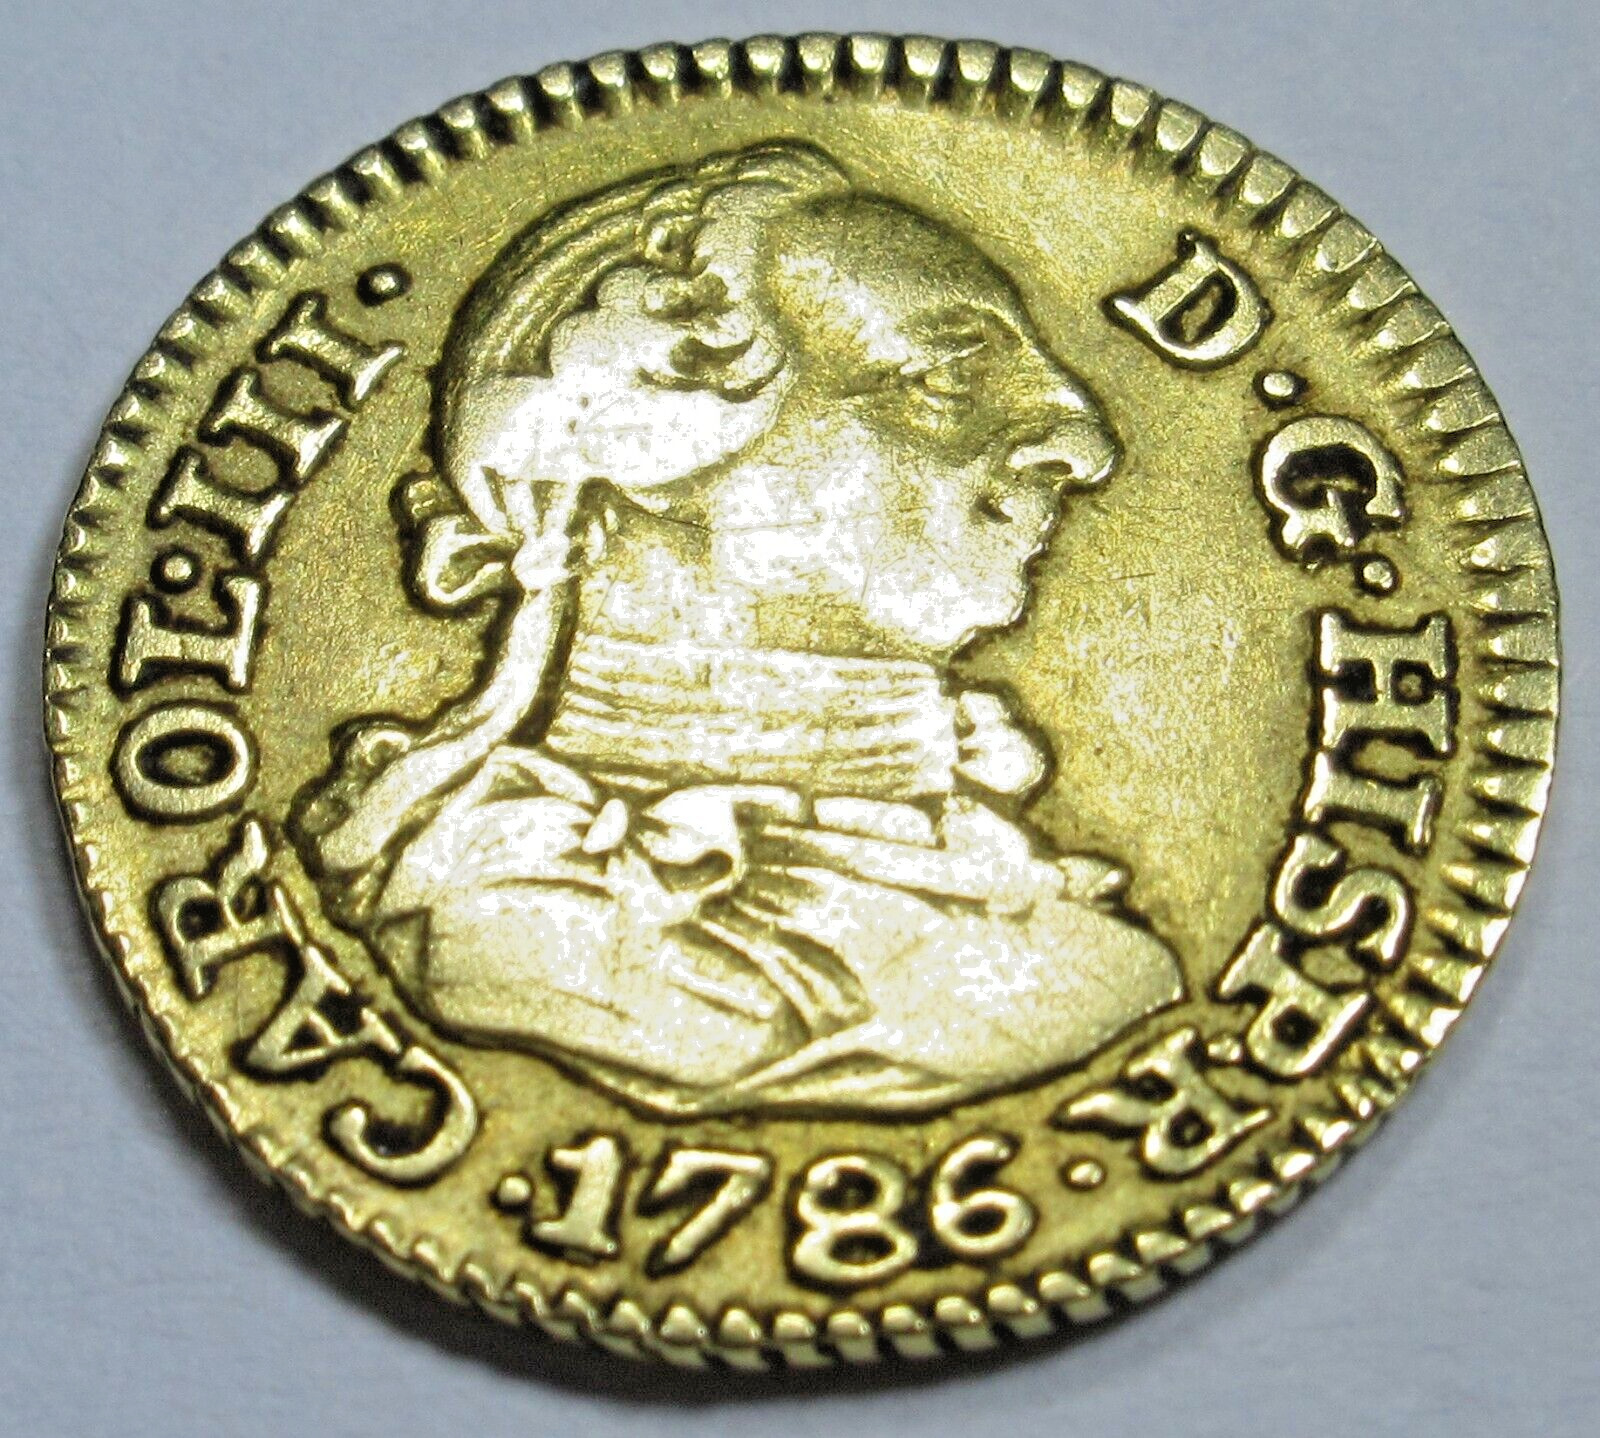 Authentic 1786 Spanish Gold 1/2 Escudo Old Antique Pirate Doubloon Treasure Coin